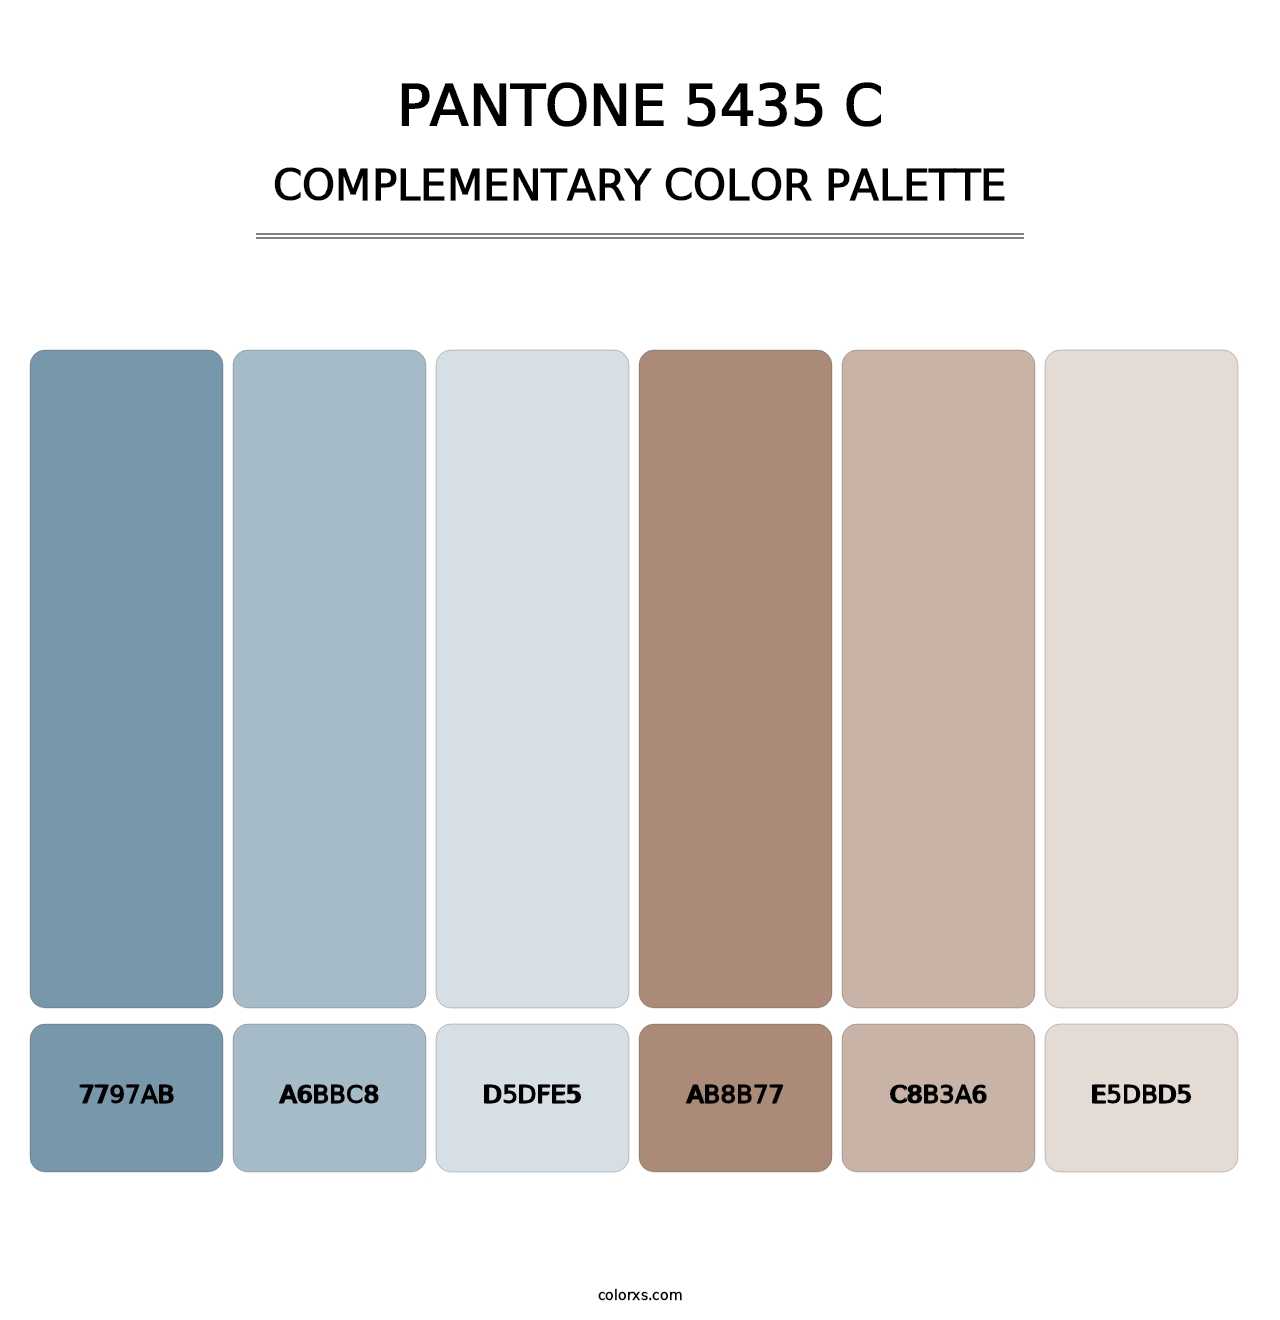 PANTONE 5435 C - Complementary Color Palette